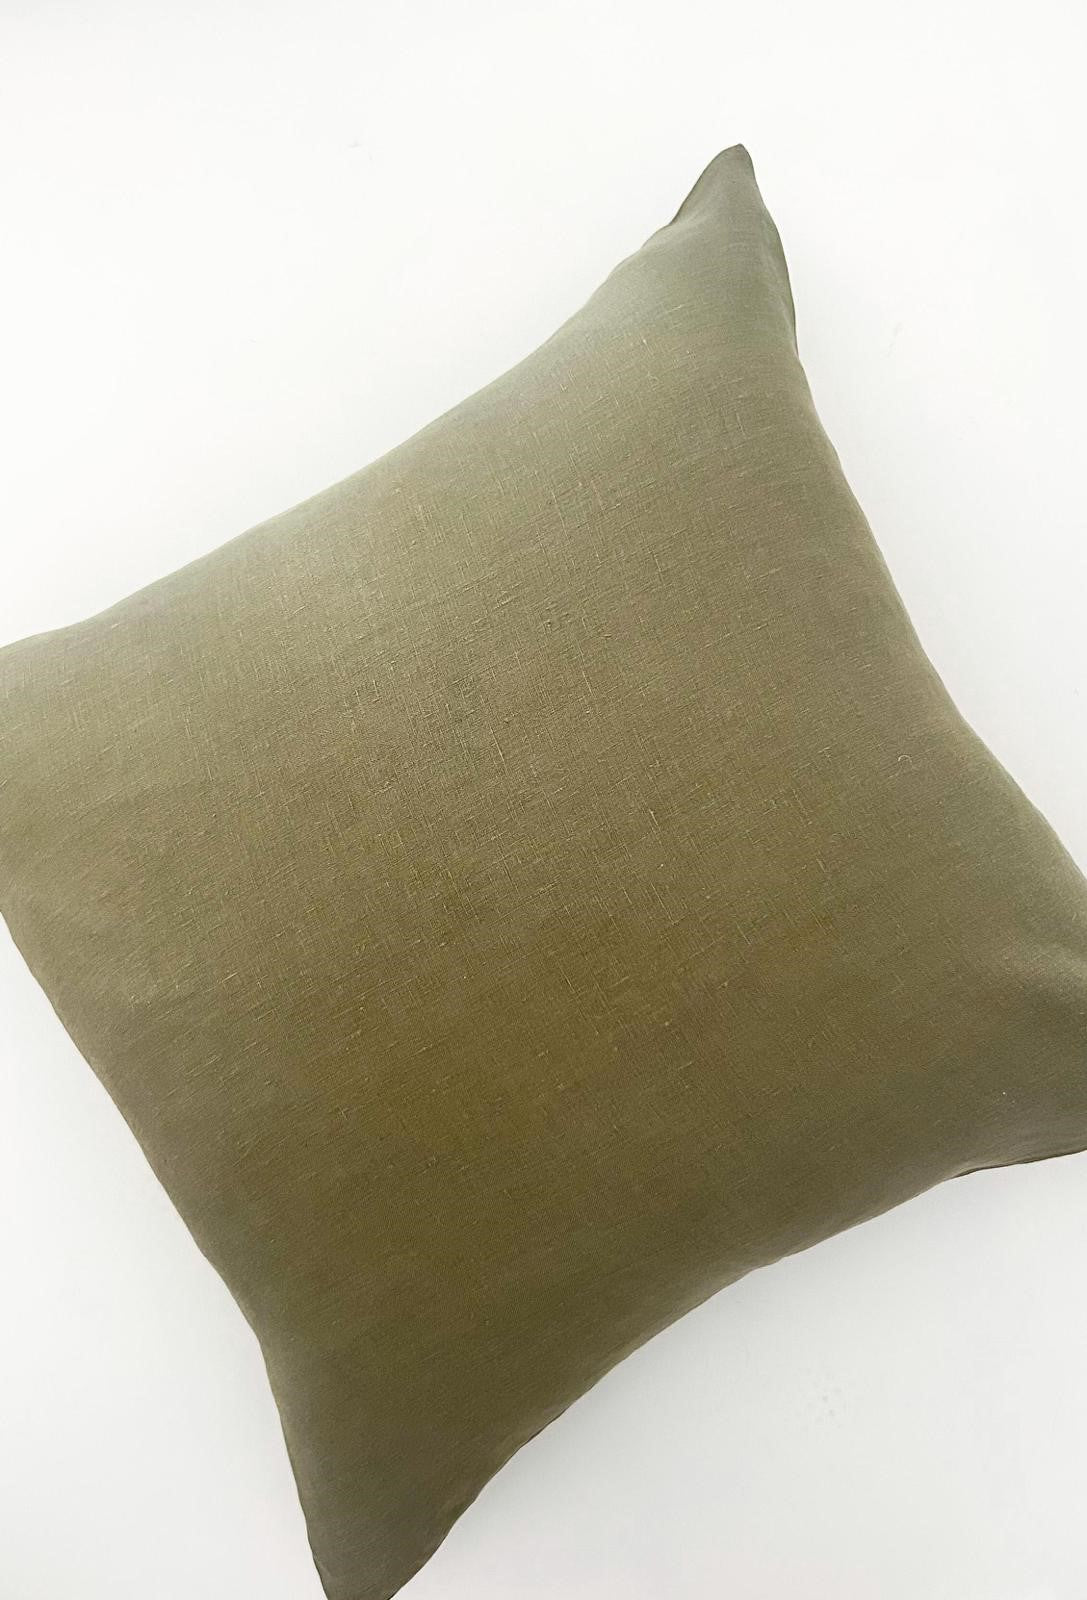 Linen Cushion - Olive